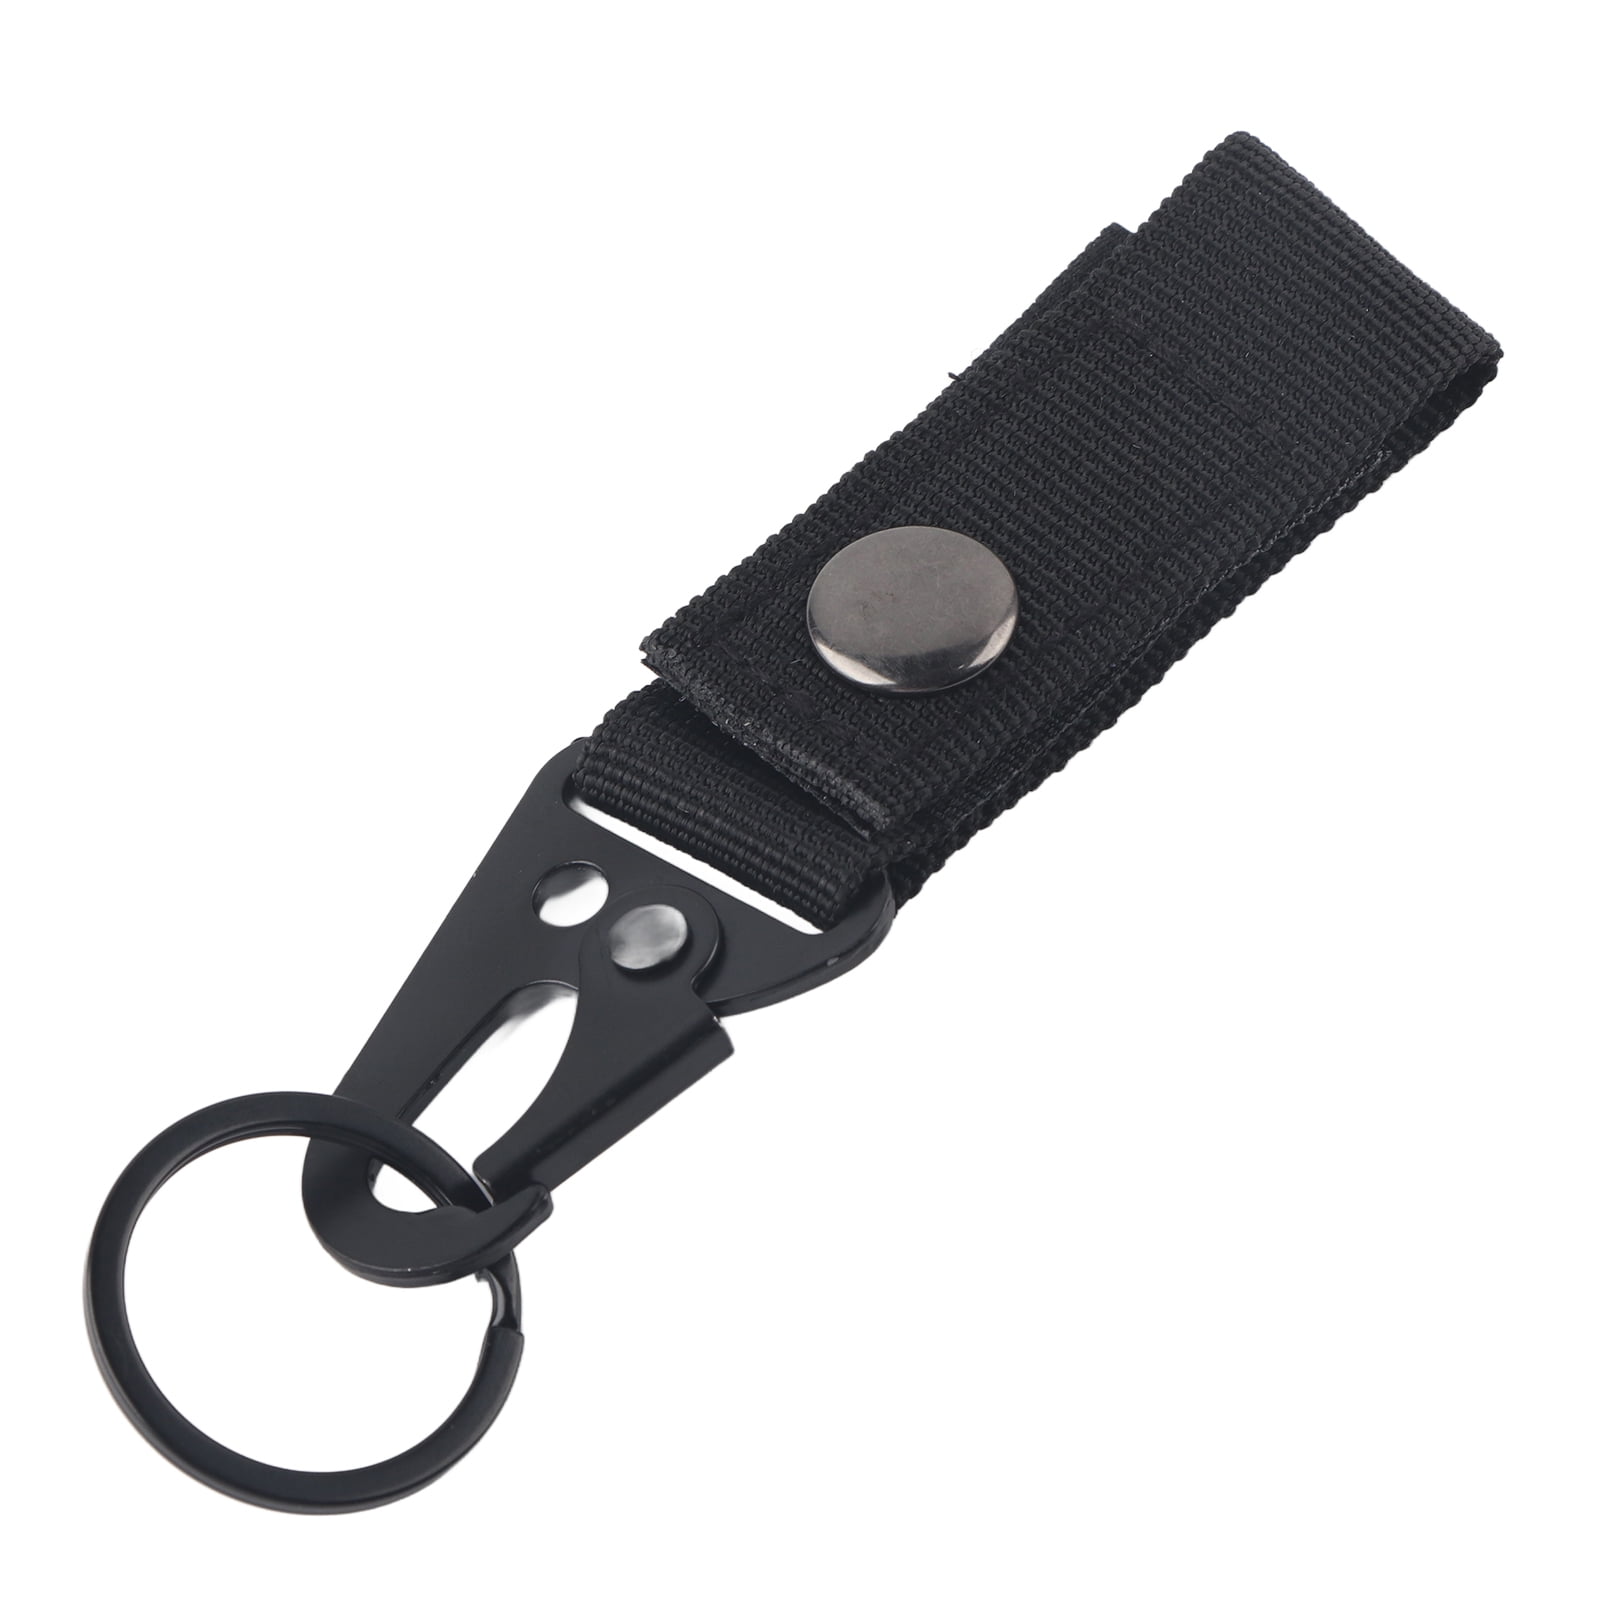 Details about   Outdoor Nylon Key Hook Webbing Molle Buckle Hanging Carabiner Useful Clip Q0K3 